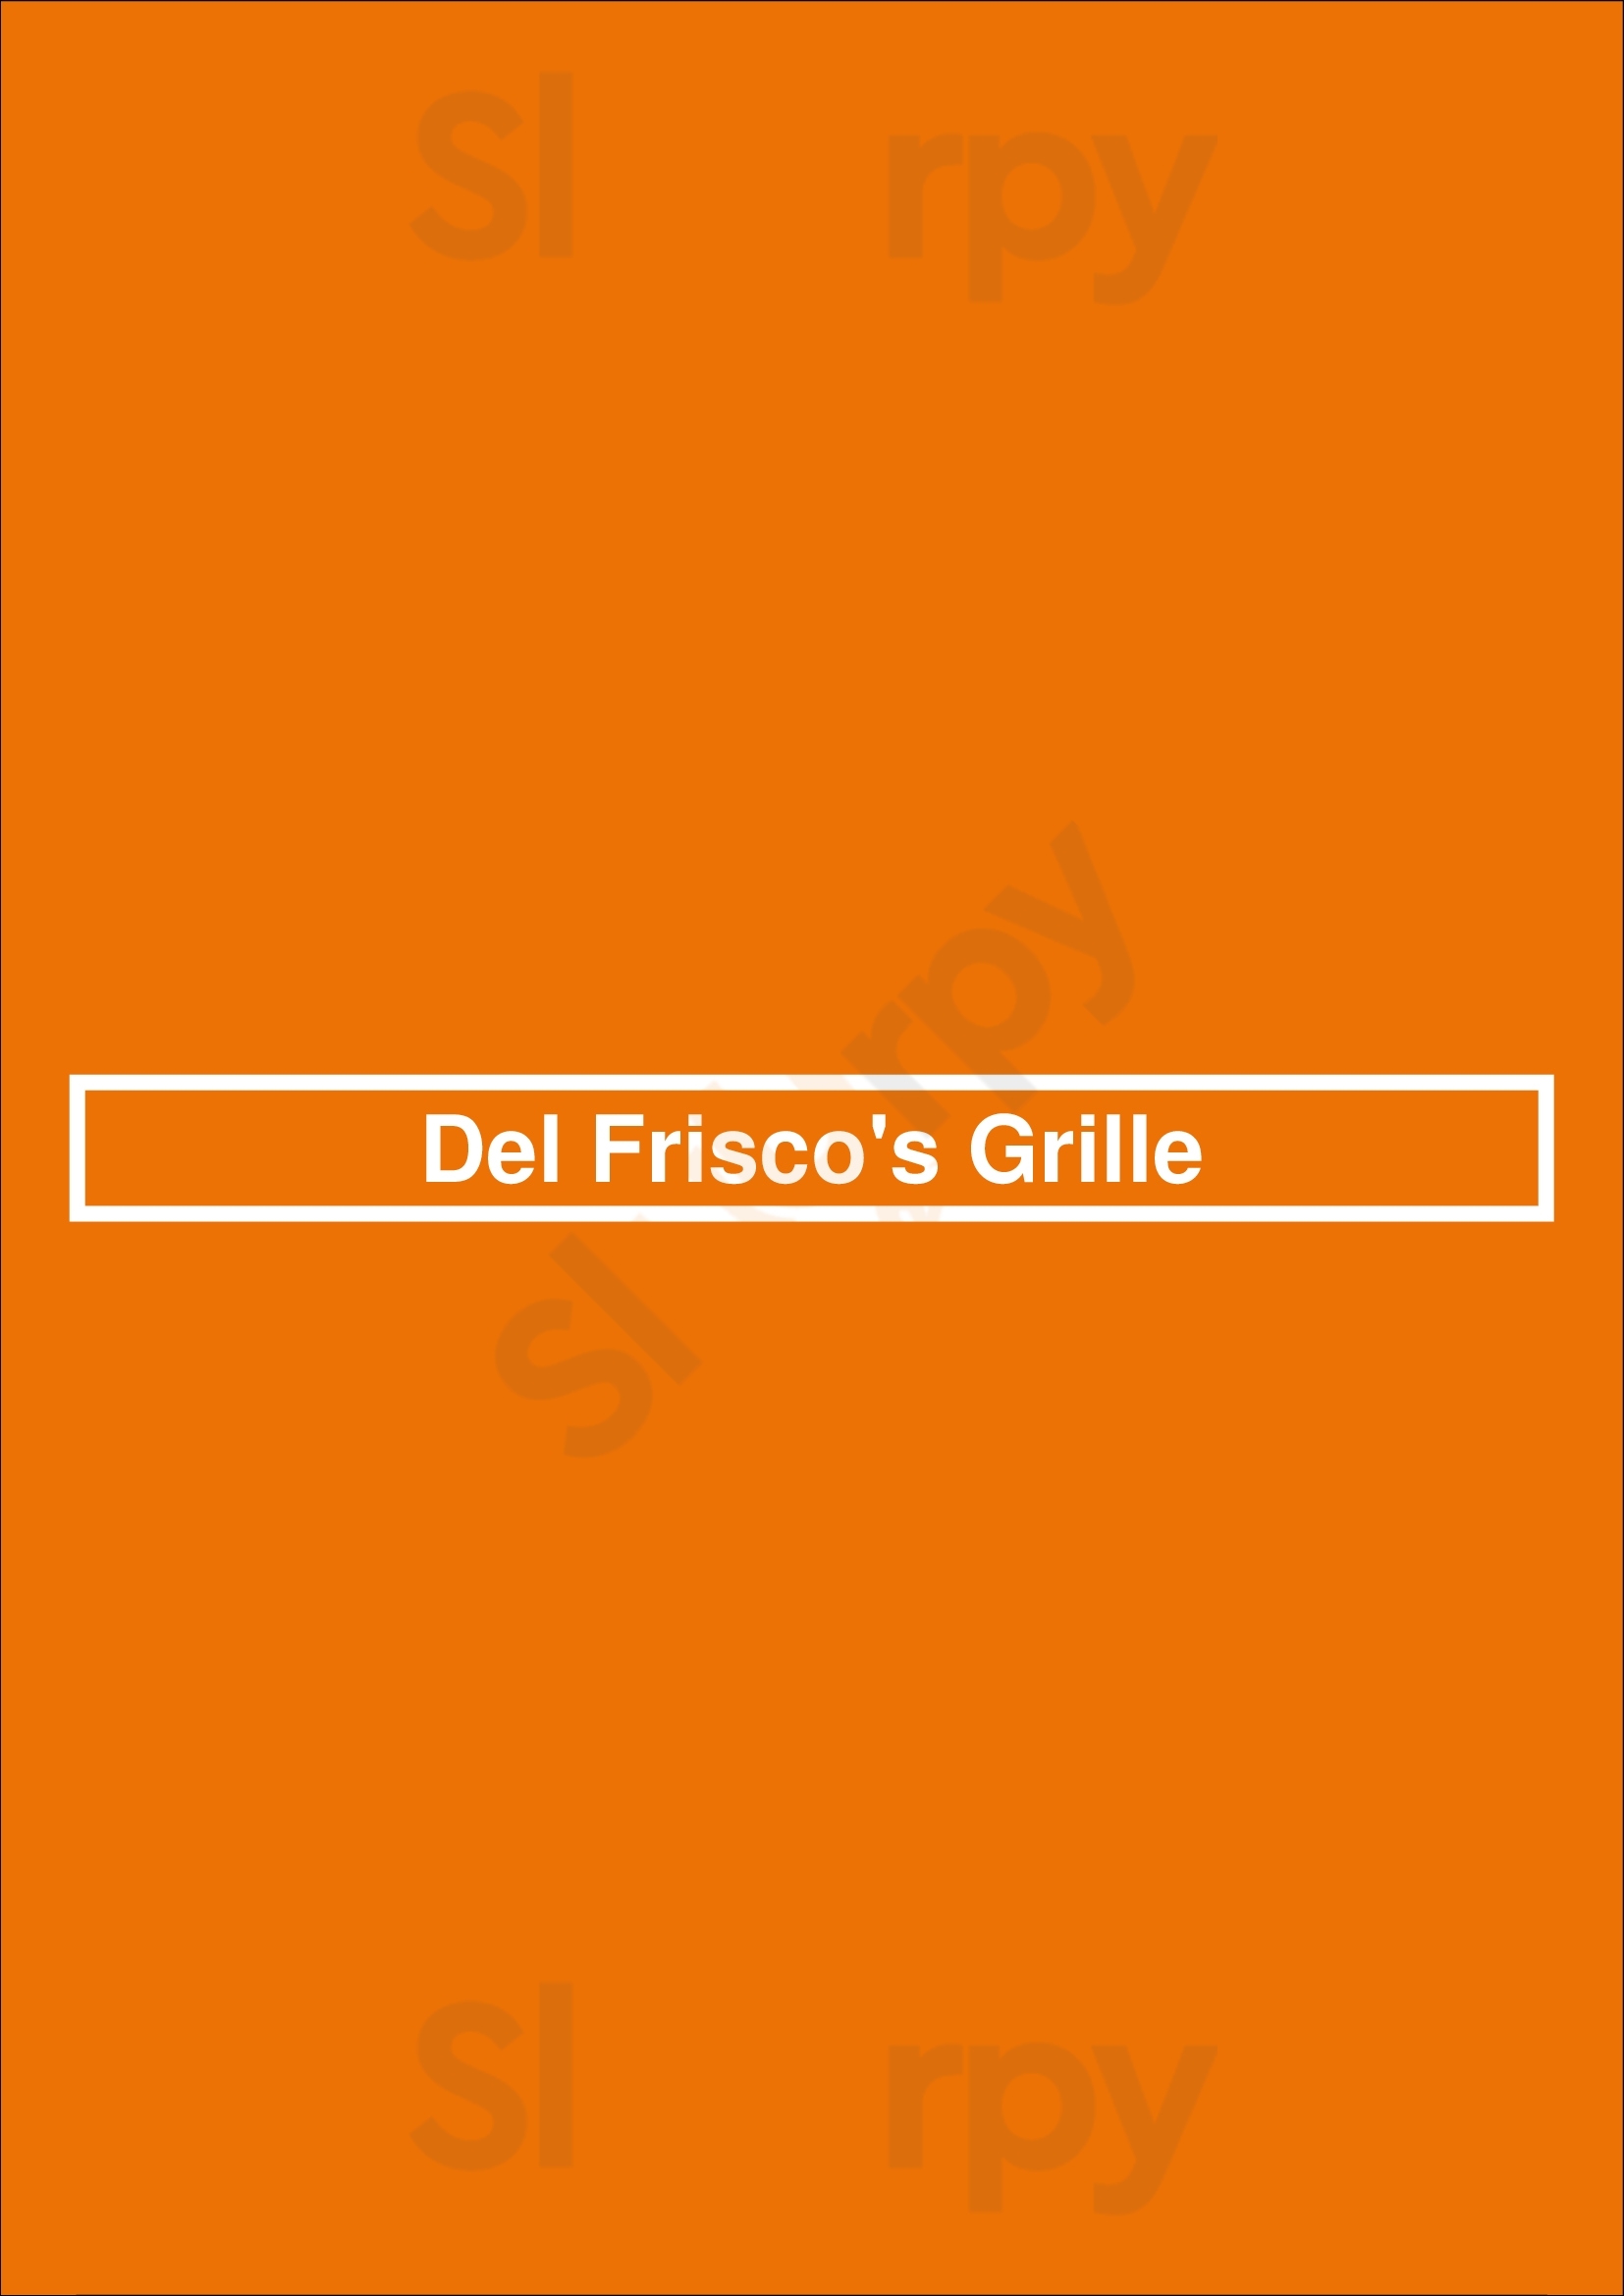 Del Frisco's Grille New York City Menu - 1